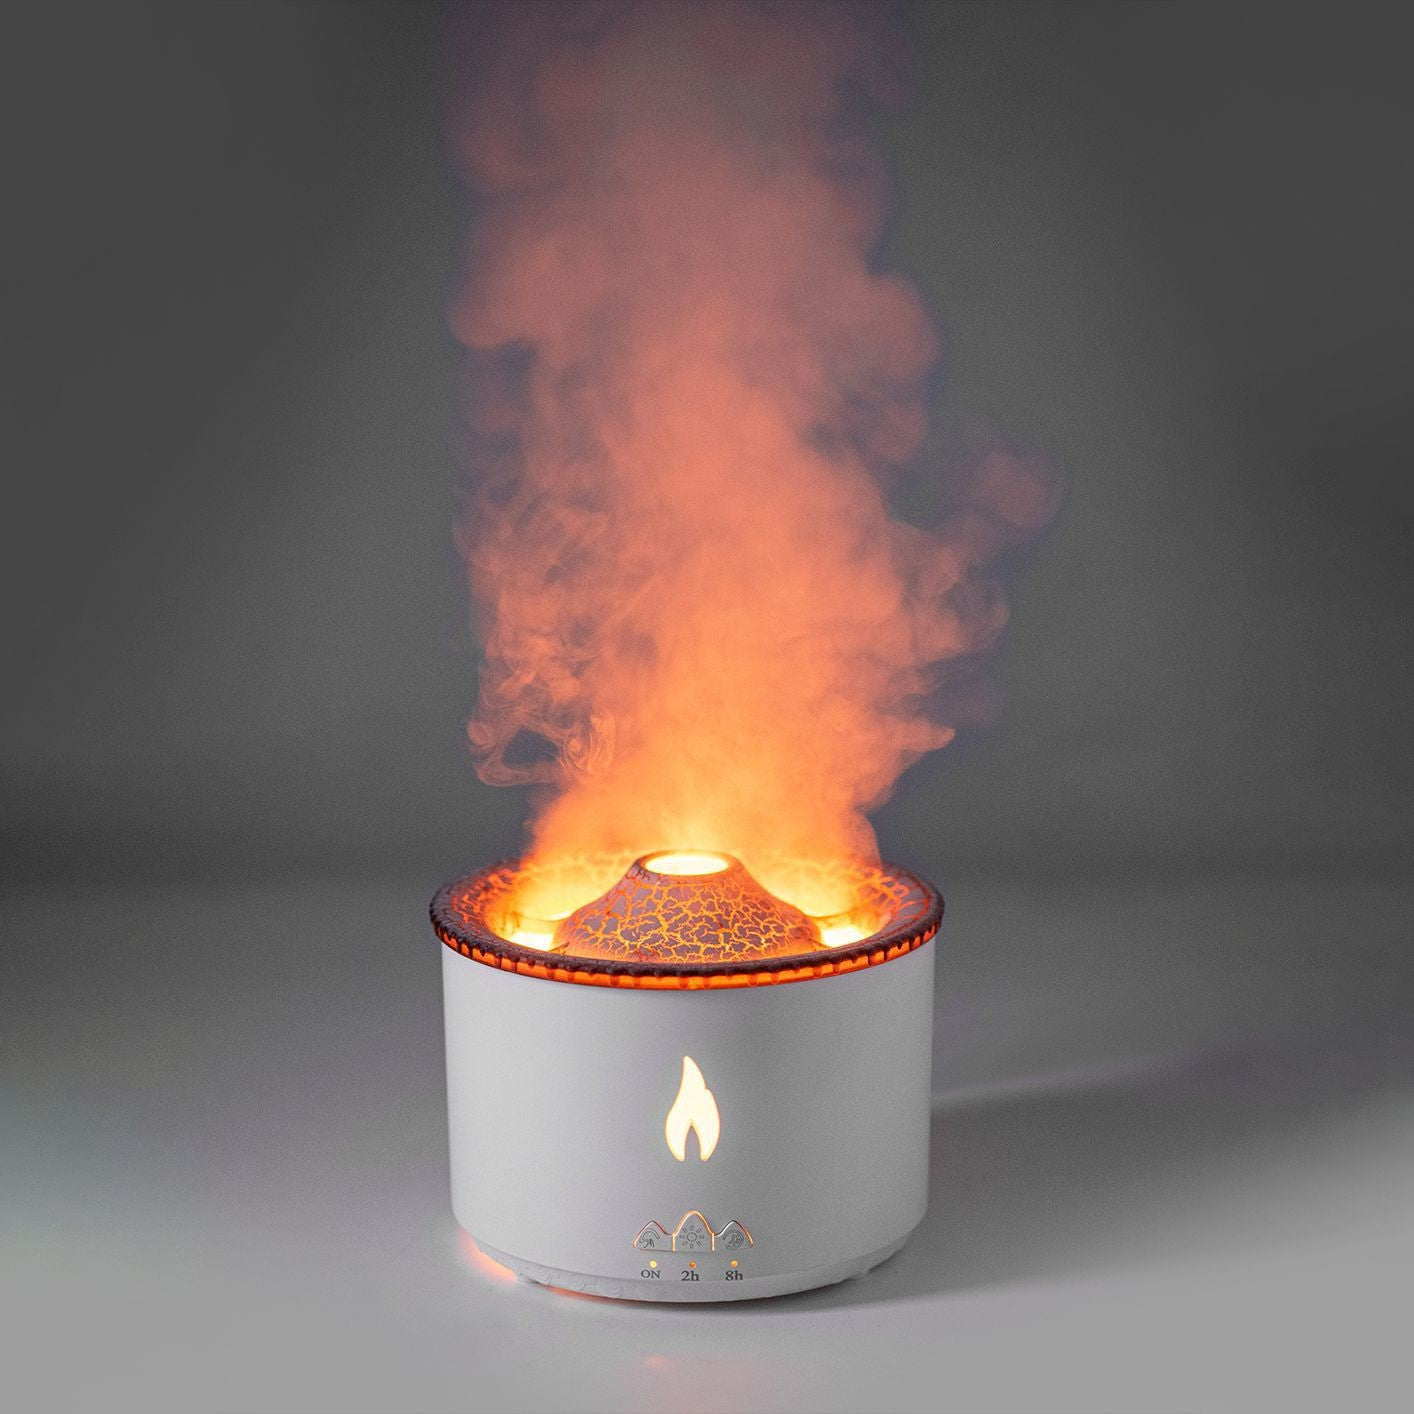 Ultrasonic Essential Oil Humidifier Volcano Aromatherapy Machine